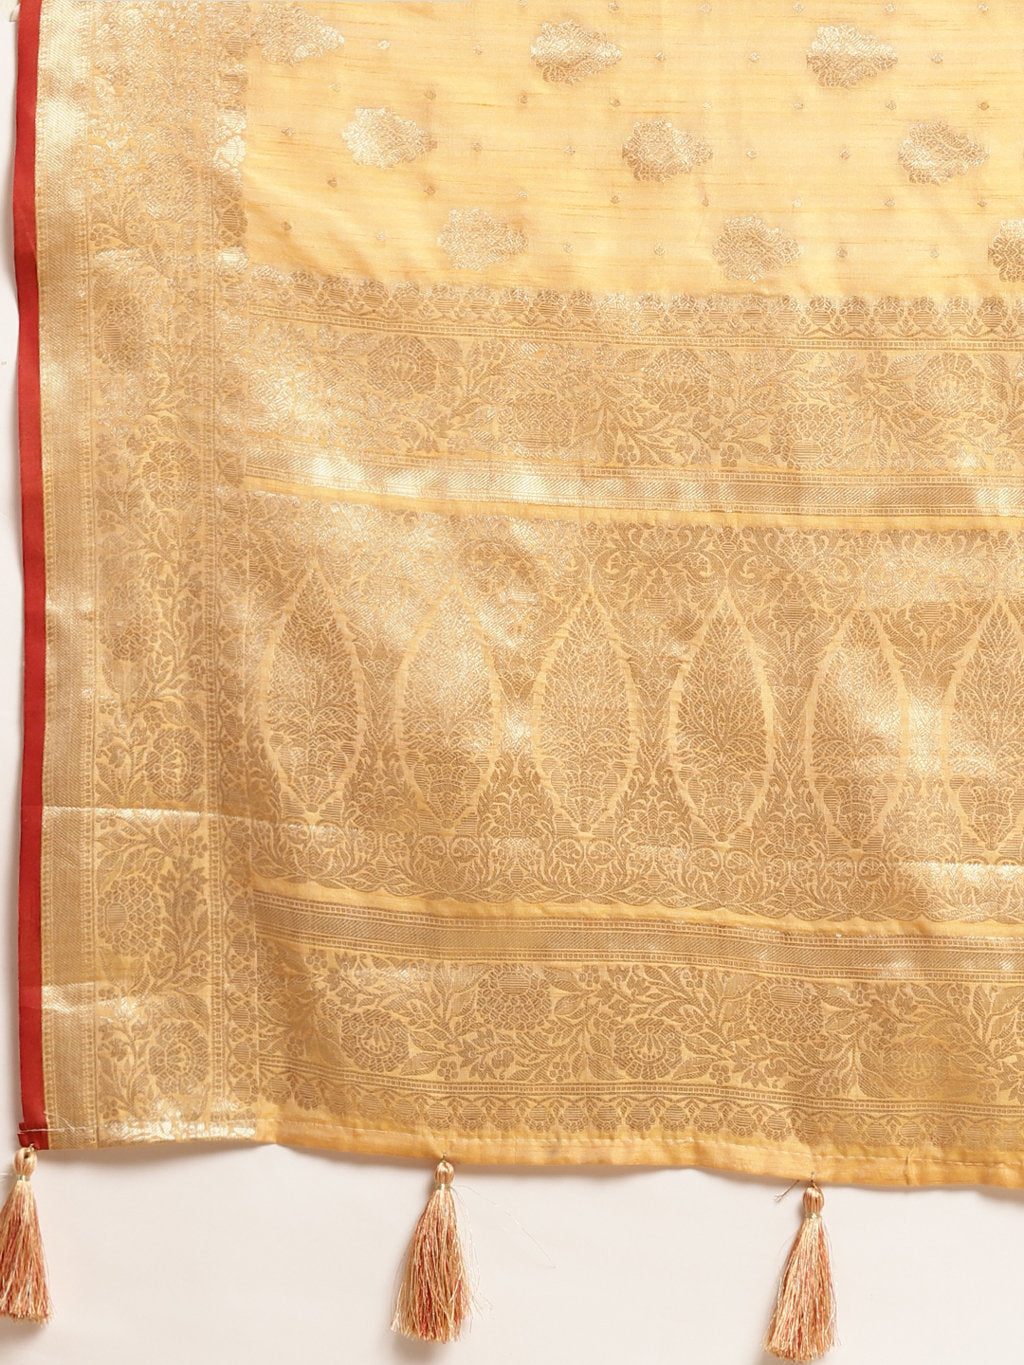 Women's Yellow Silk Woven Work Traditional Tassle Saree - Sangam Prints